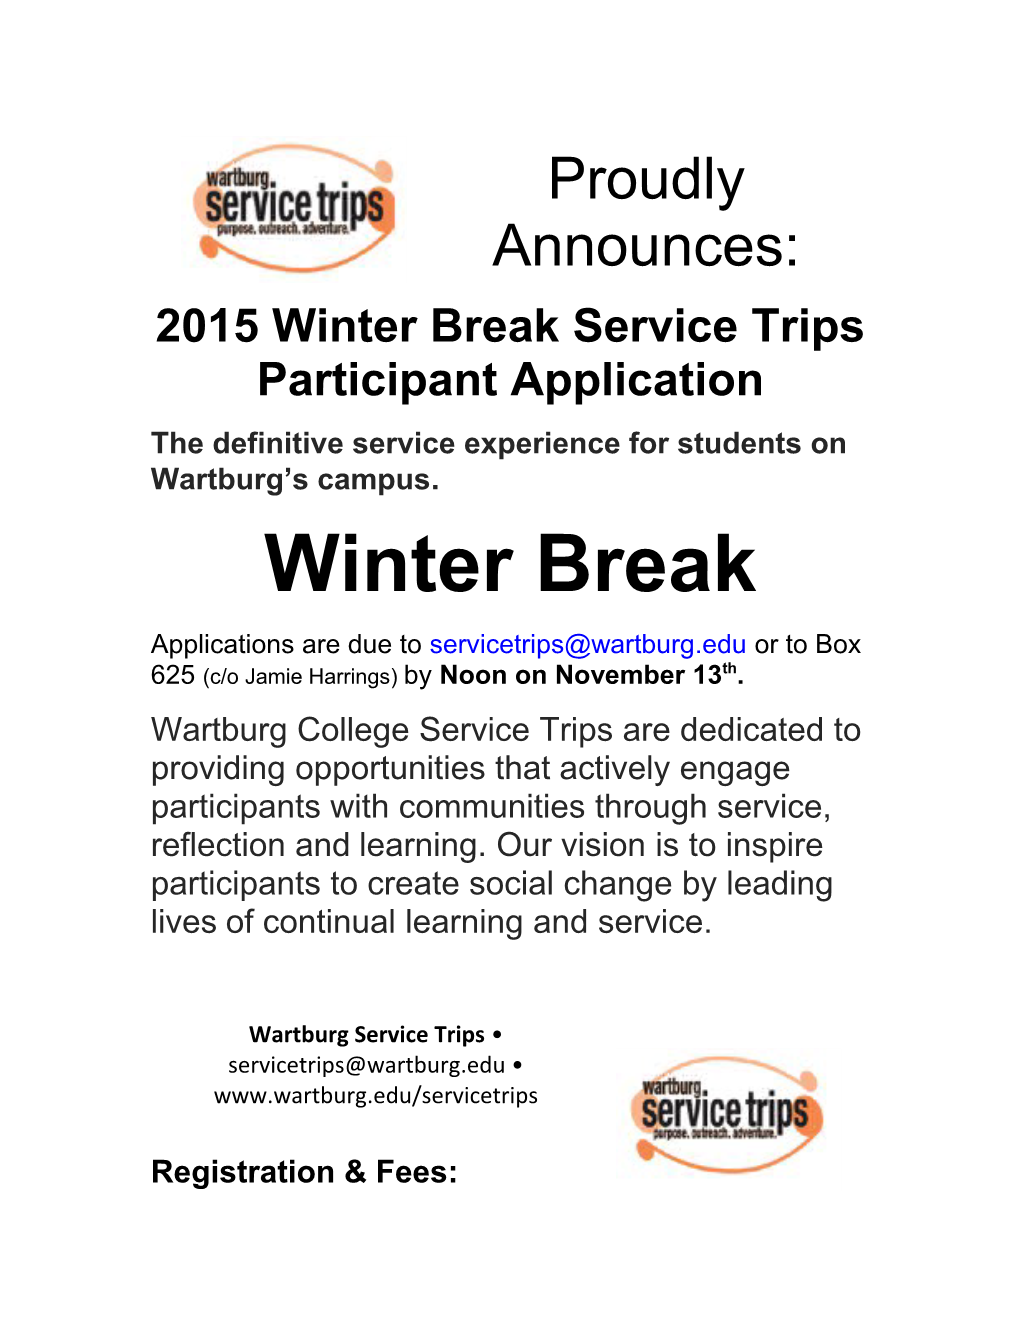 2015 Winter Break Service Trips Participant Application